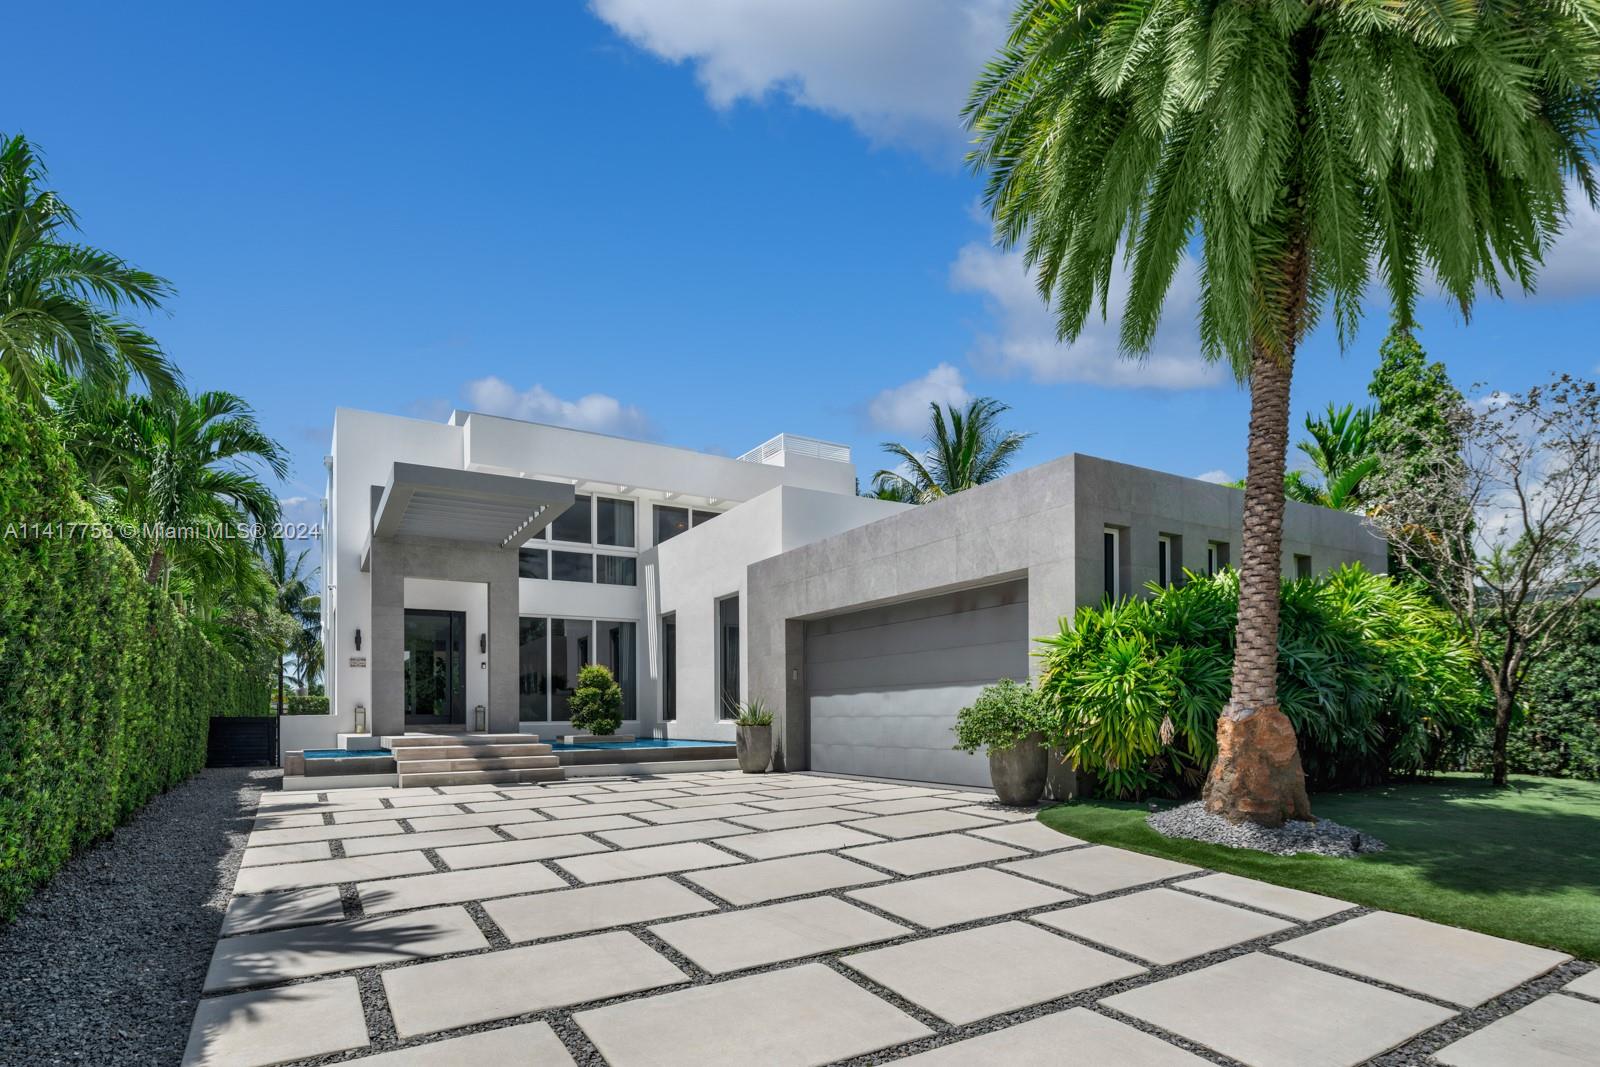 Property for Sale at 672 S Shore Dr, Miami Beach, Miami-Dade County, Florida - Bedrooms: 5 
Bathrooms: 6  - $7,500,000